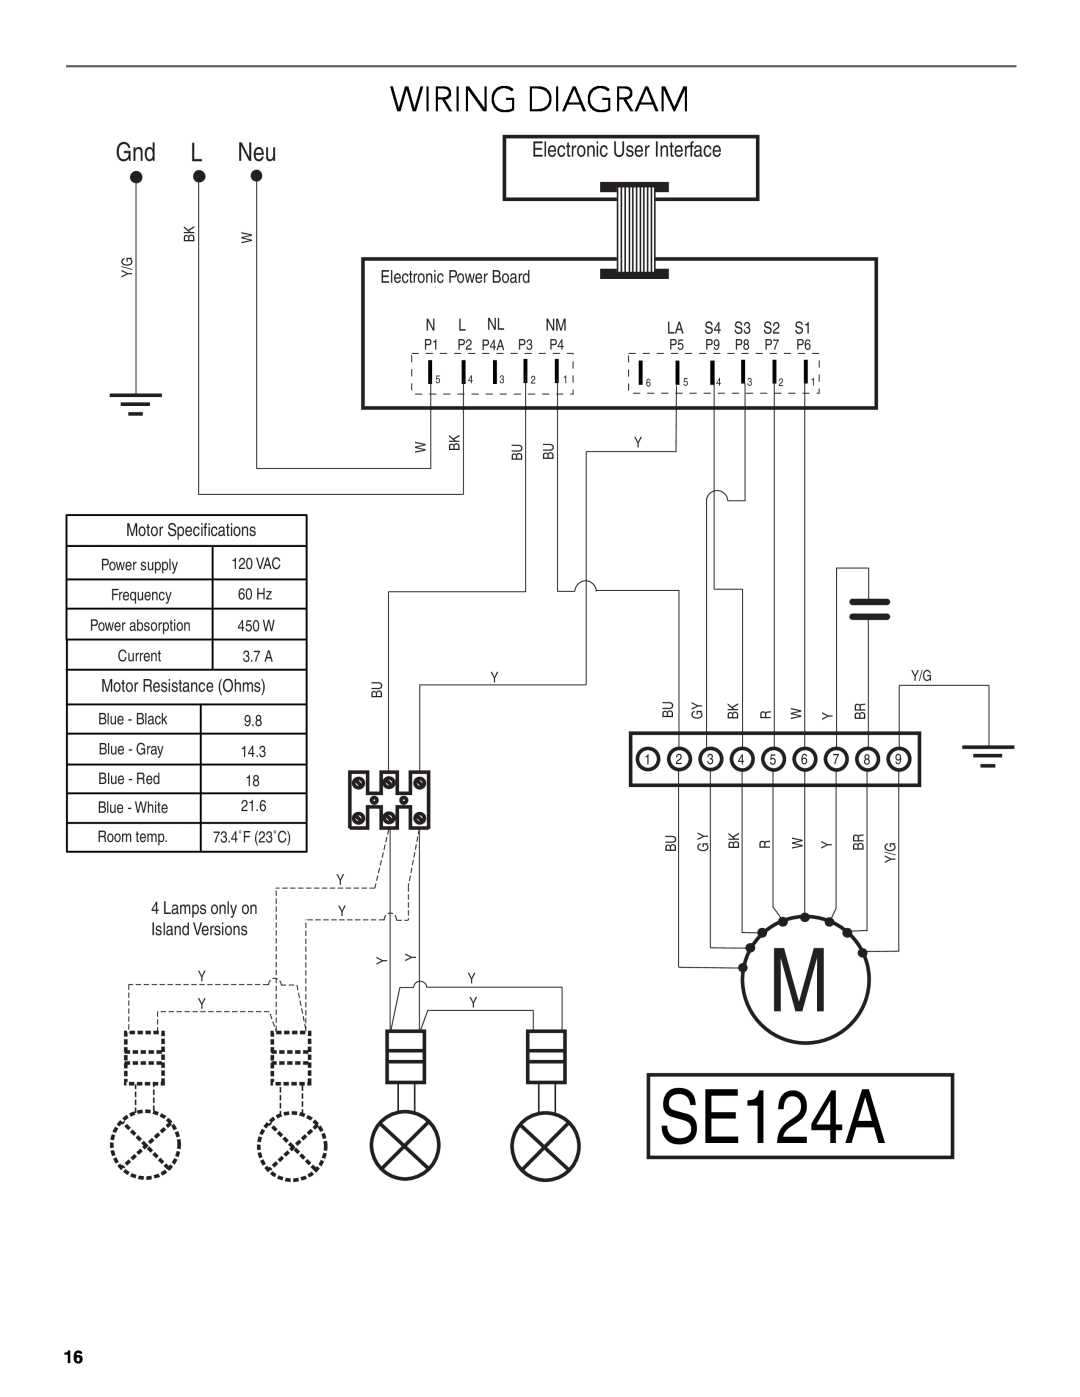 KitchenAid LI3ZGC/W10320581E SE124A, Wiring Diagram, Gnd L Neu, Electronic User Interface, Motor Specifications 